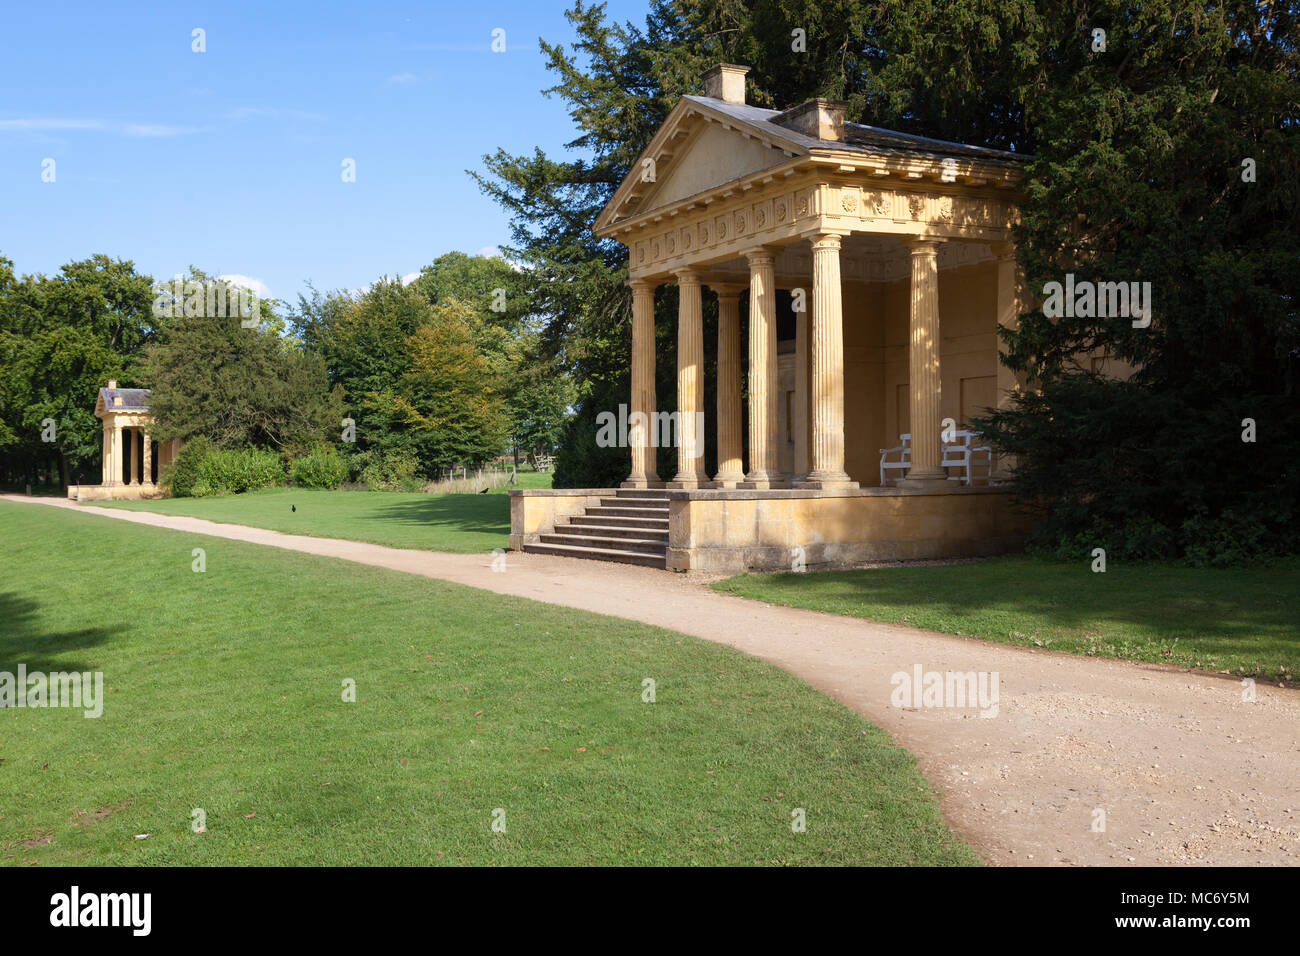 Der See Pavillons, Stowe Landscape Gardens, Stowe House, Buckinghamshire, England, Großbritannien Stockfoto